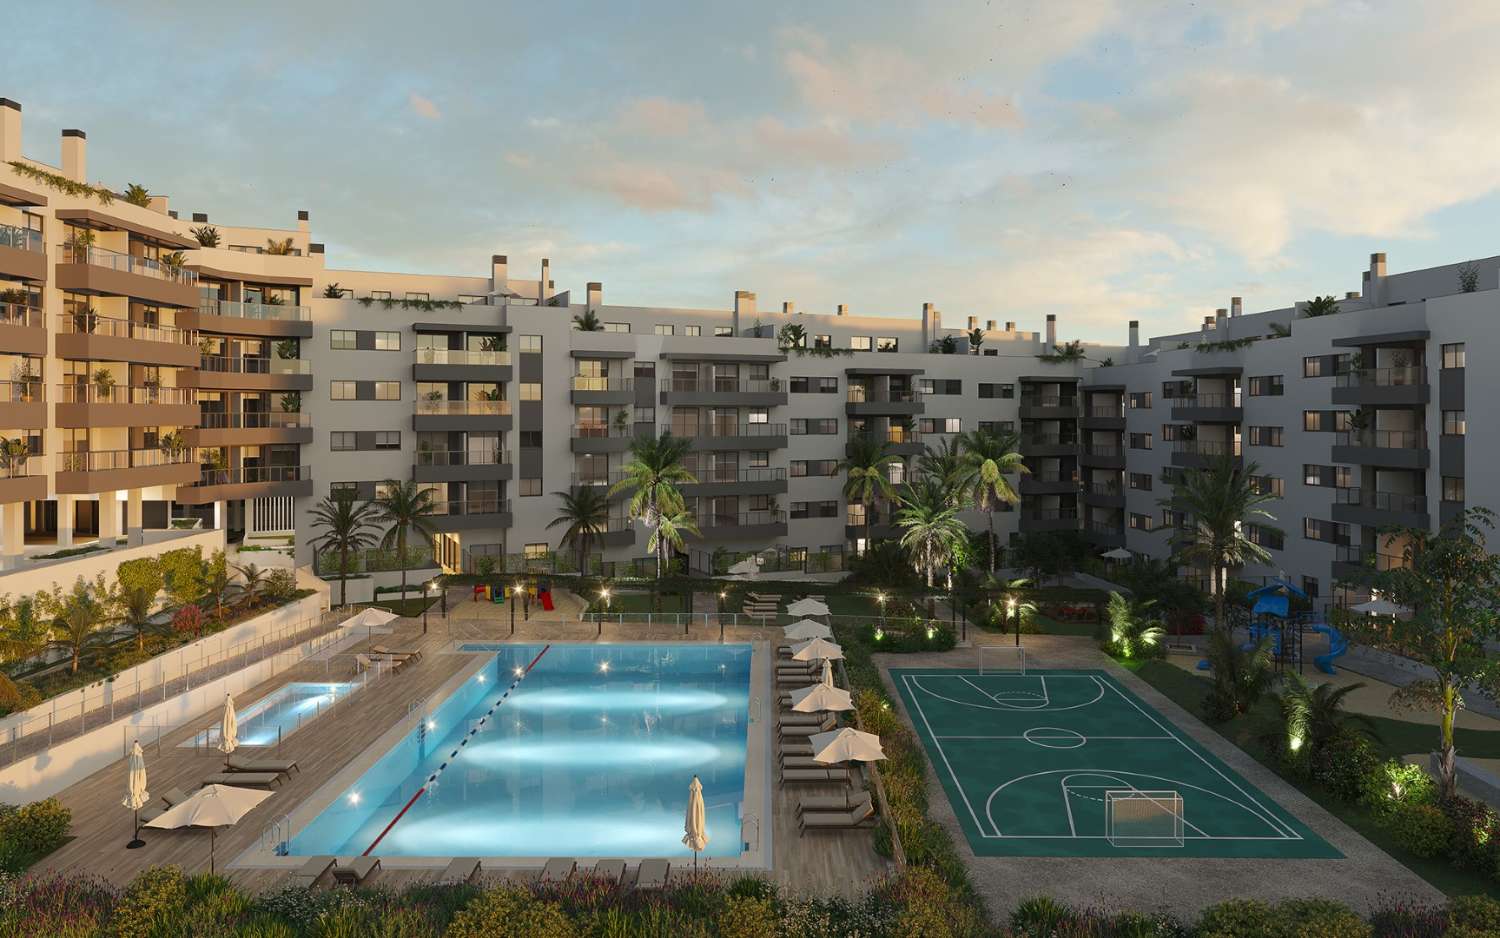 Excellent new construction apartments in Las Lagunas, Mijas Costa!